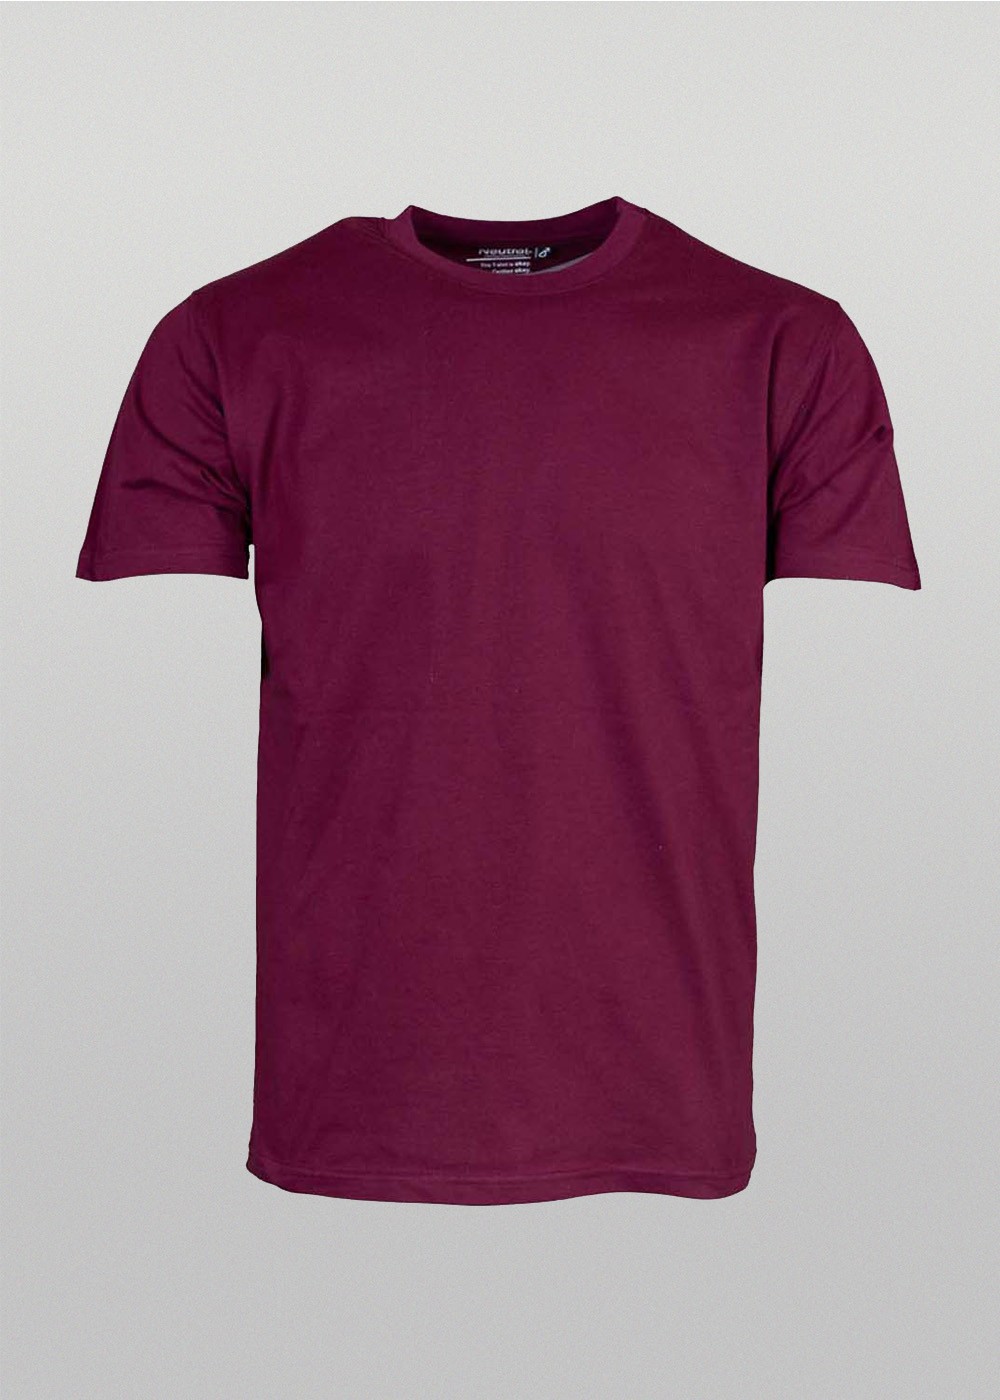 Outlet Premium Unisex T-shirt Burgundy